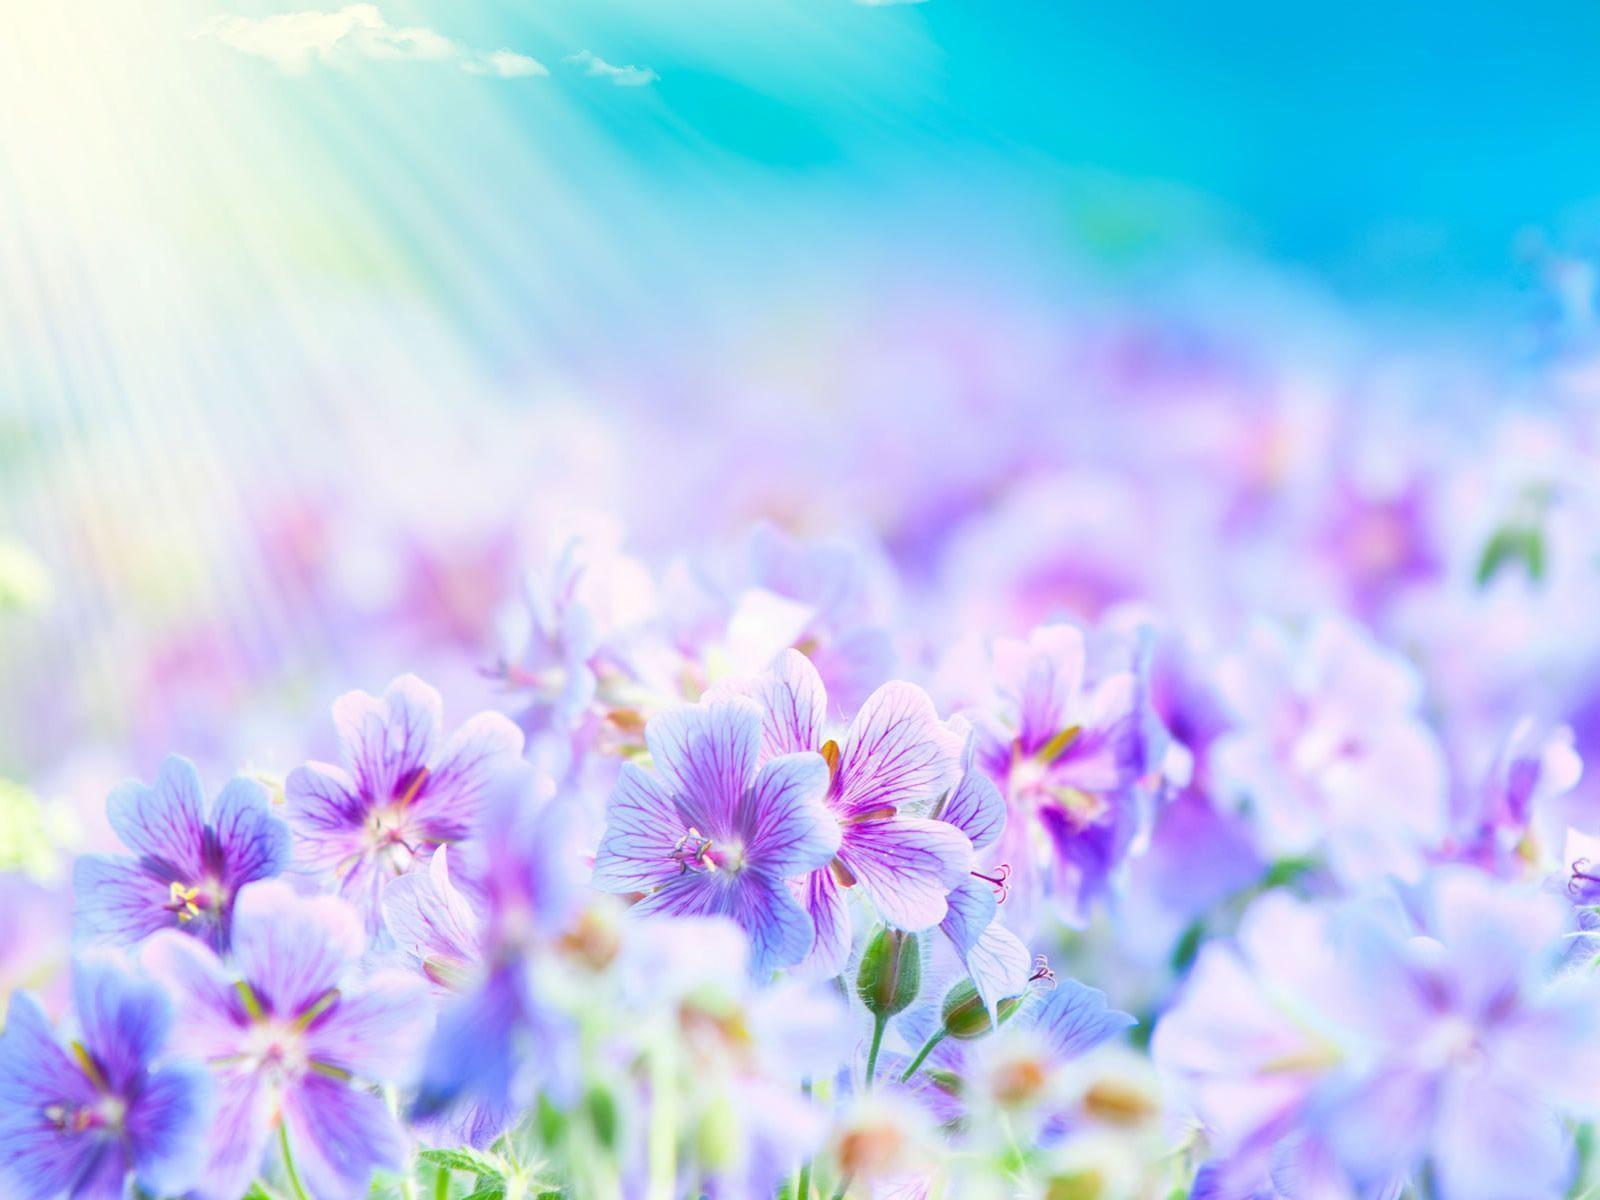 Flower Background. HD Wallpaper Image